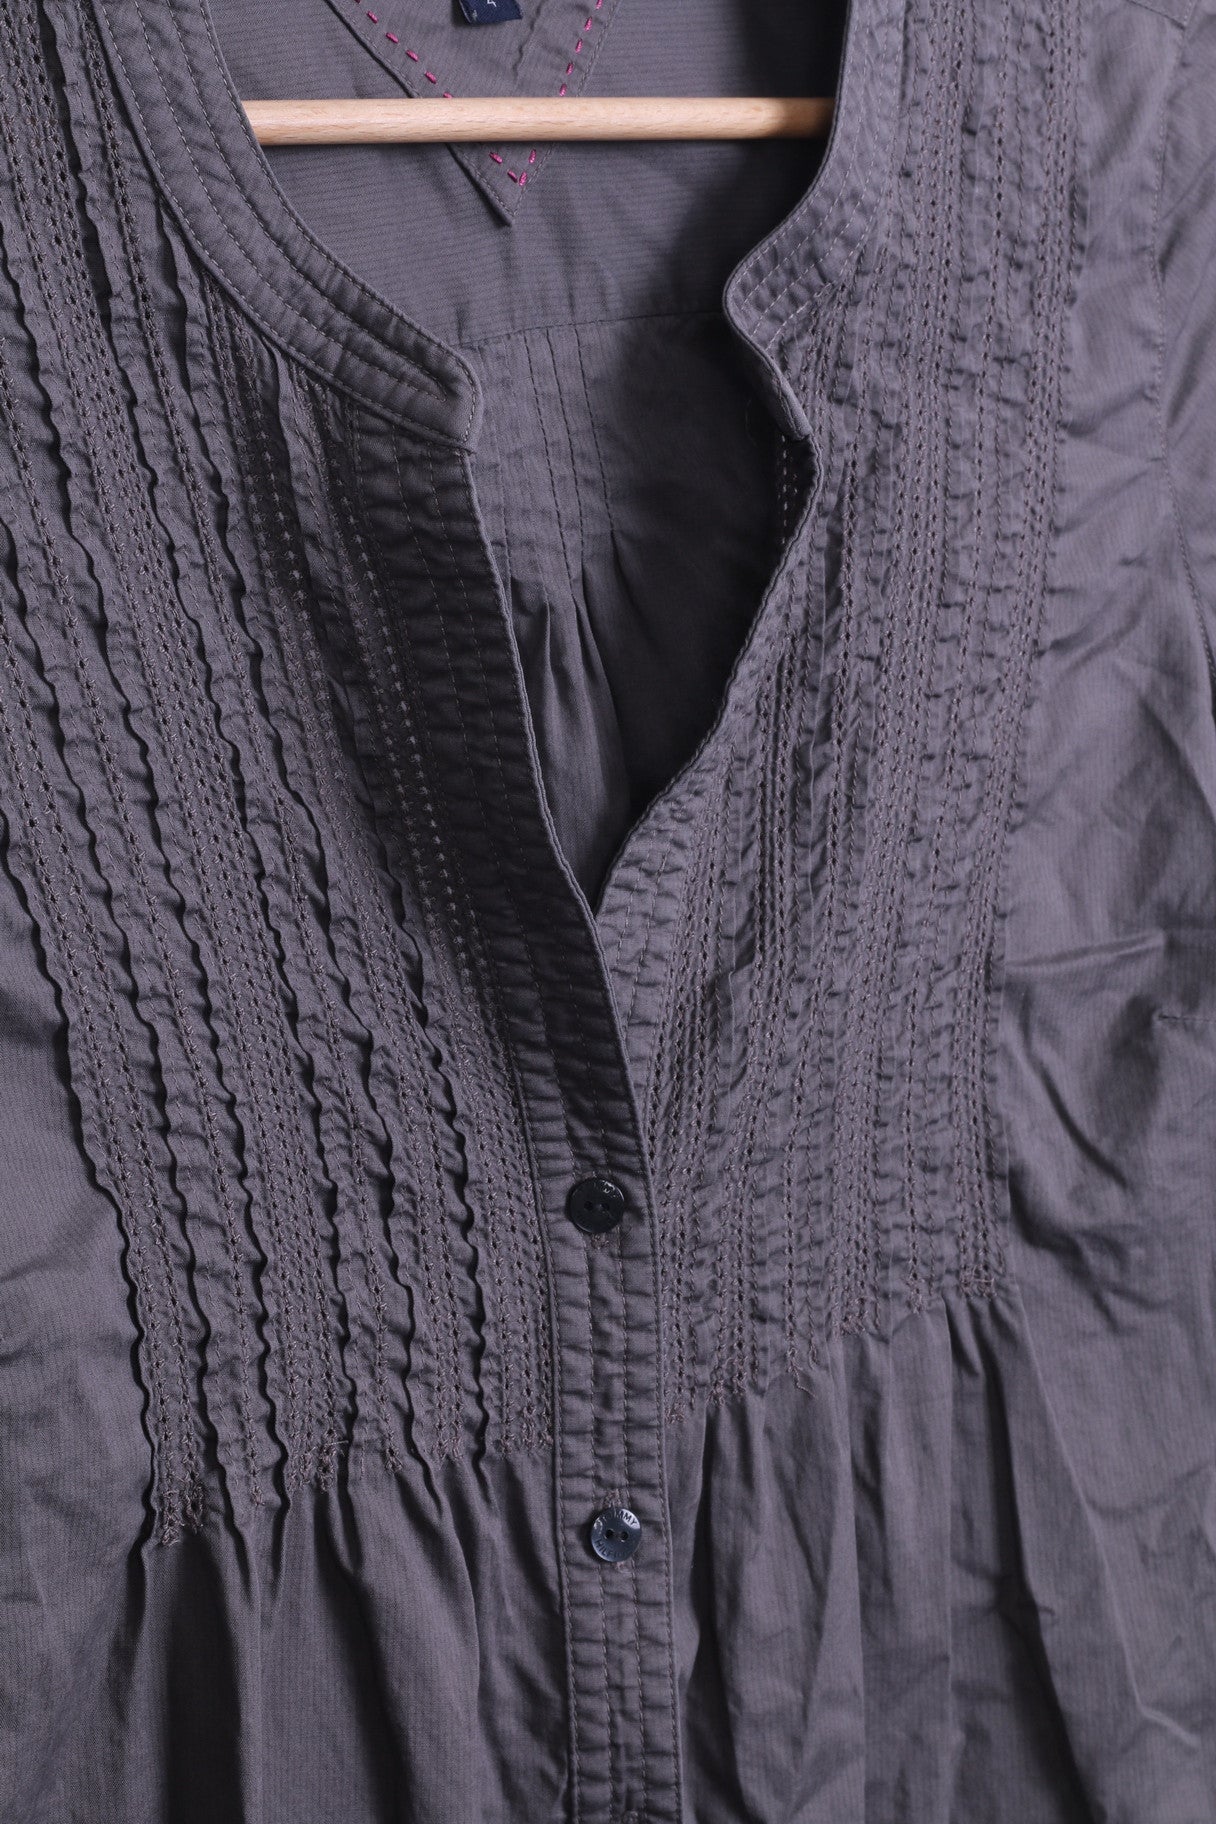 Tommy Hilfiger Womens 4 M Casual Shirt Grey V Neck Blouse - RetrospectClothes